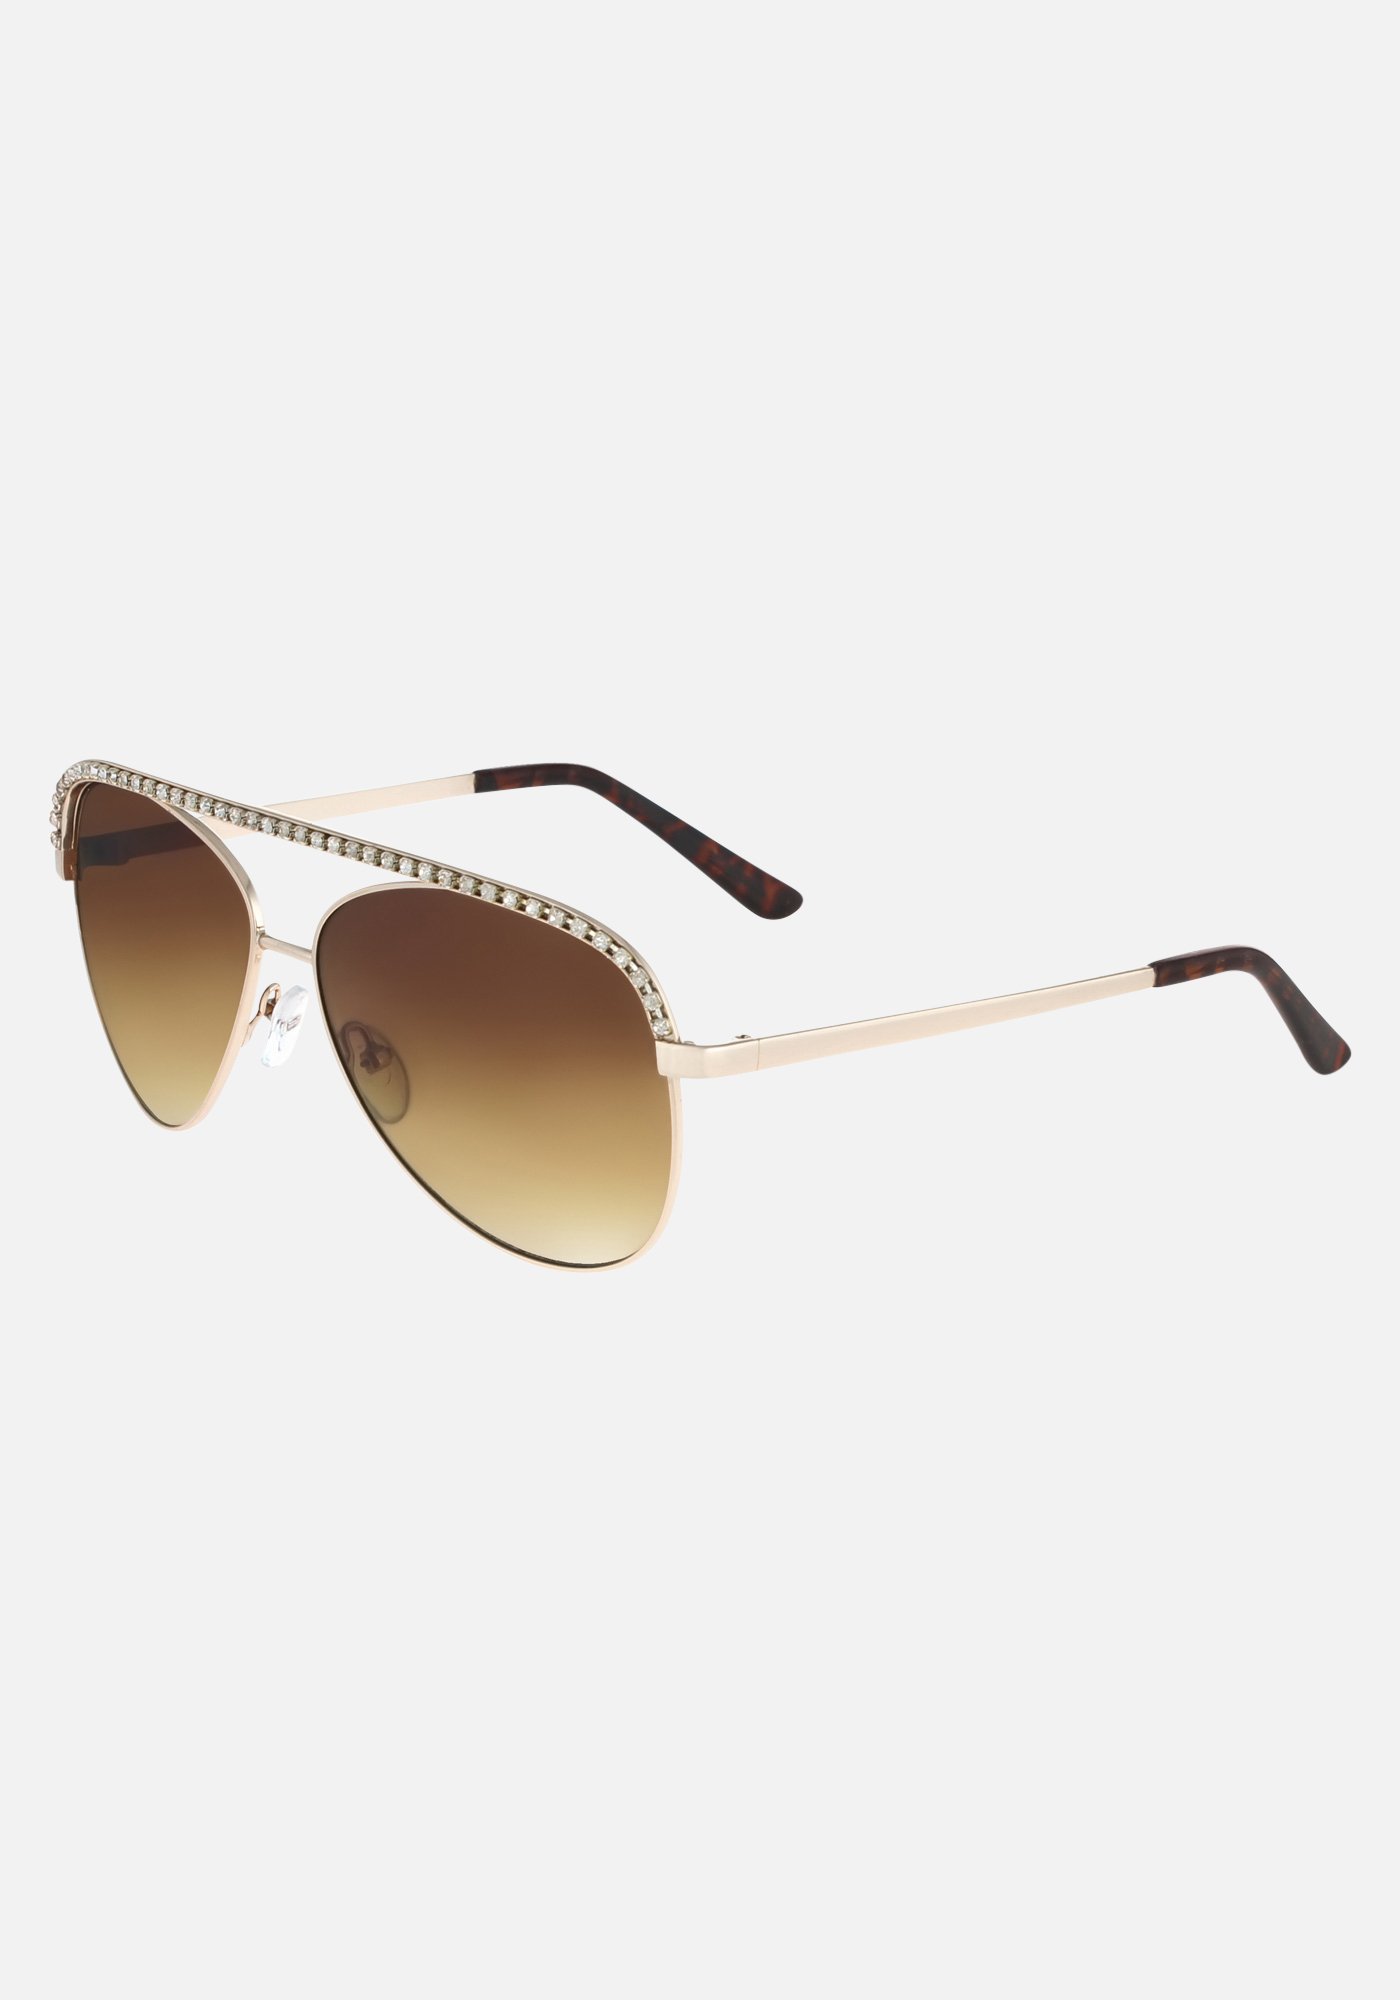 Bebe Women's Crystal Aviator Sunglasses in Gold Metal